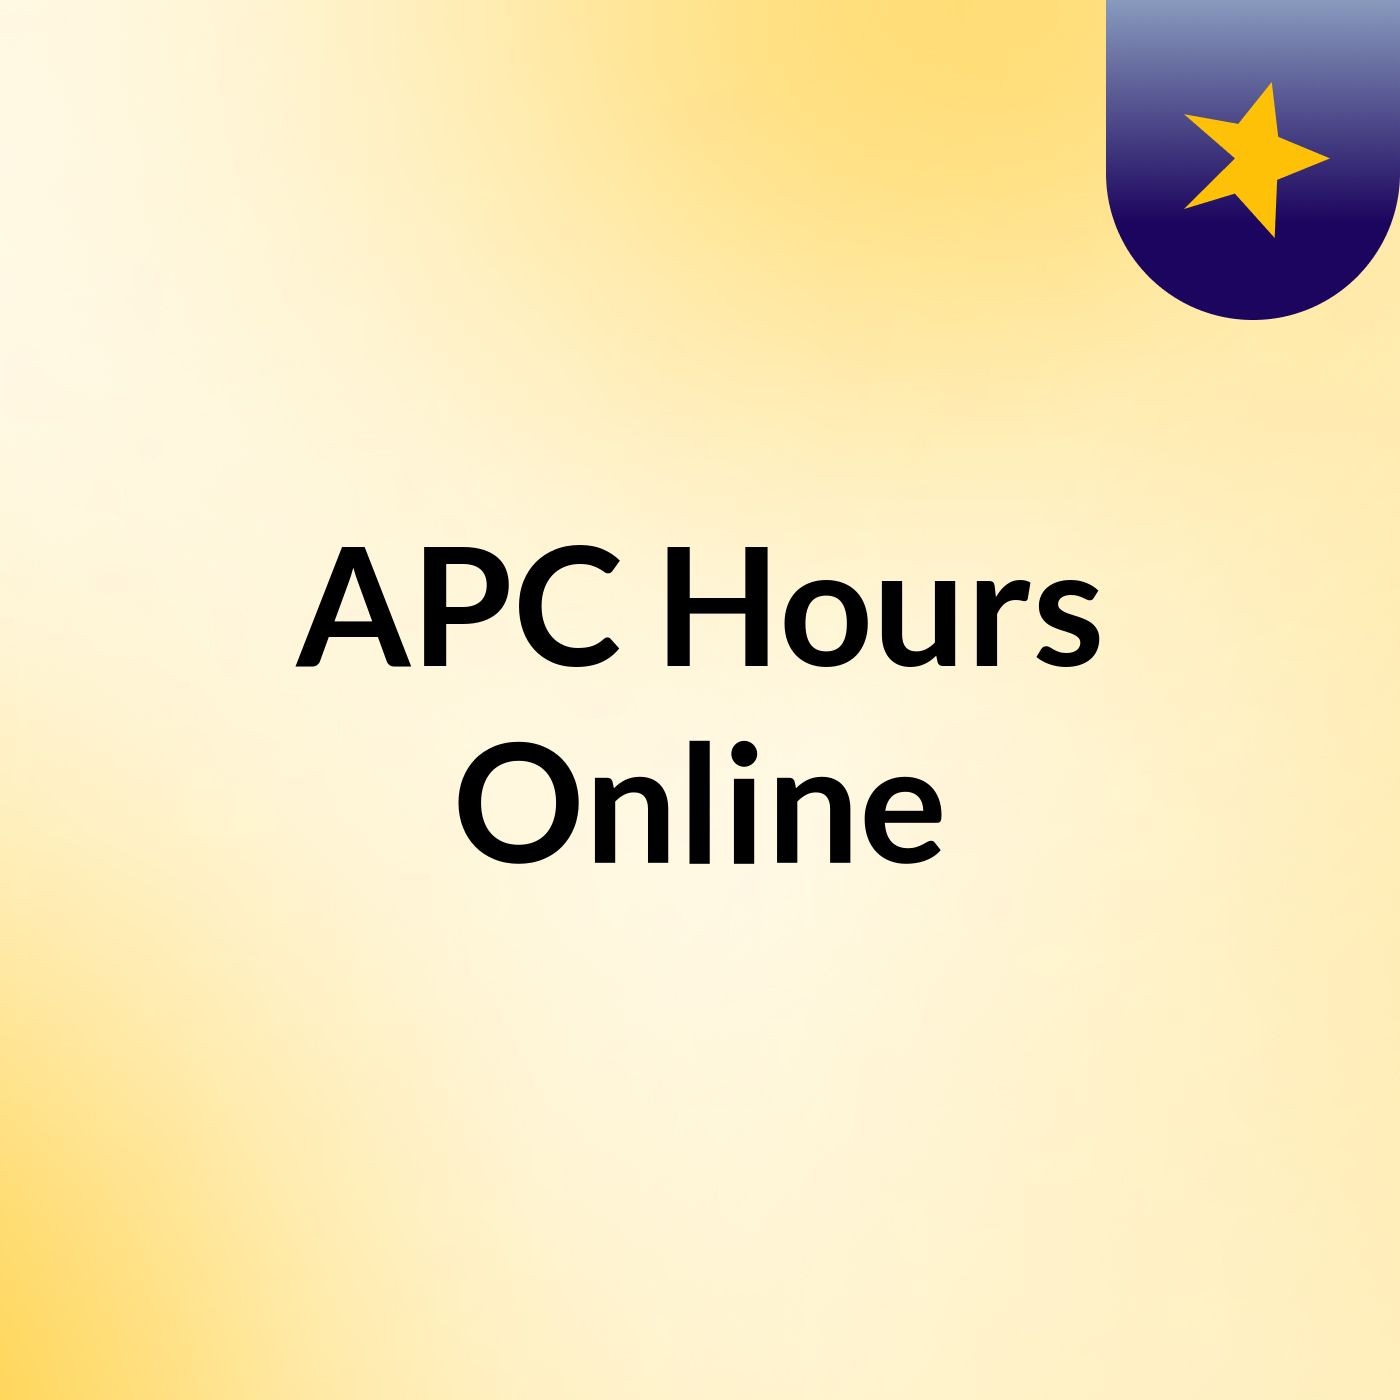 APC Hours Online